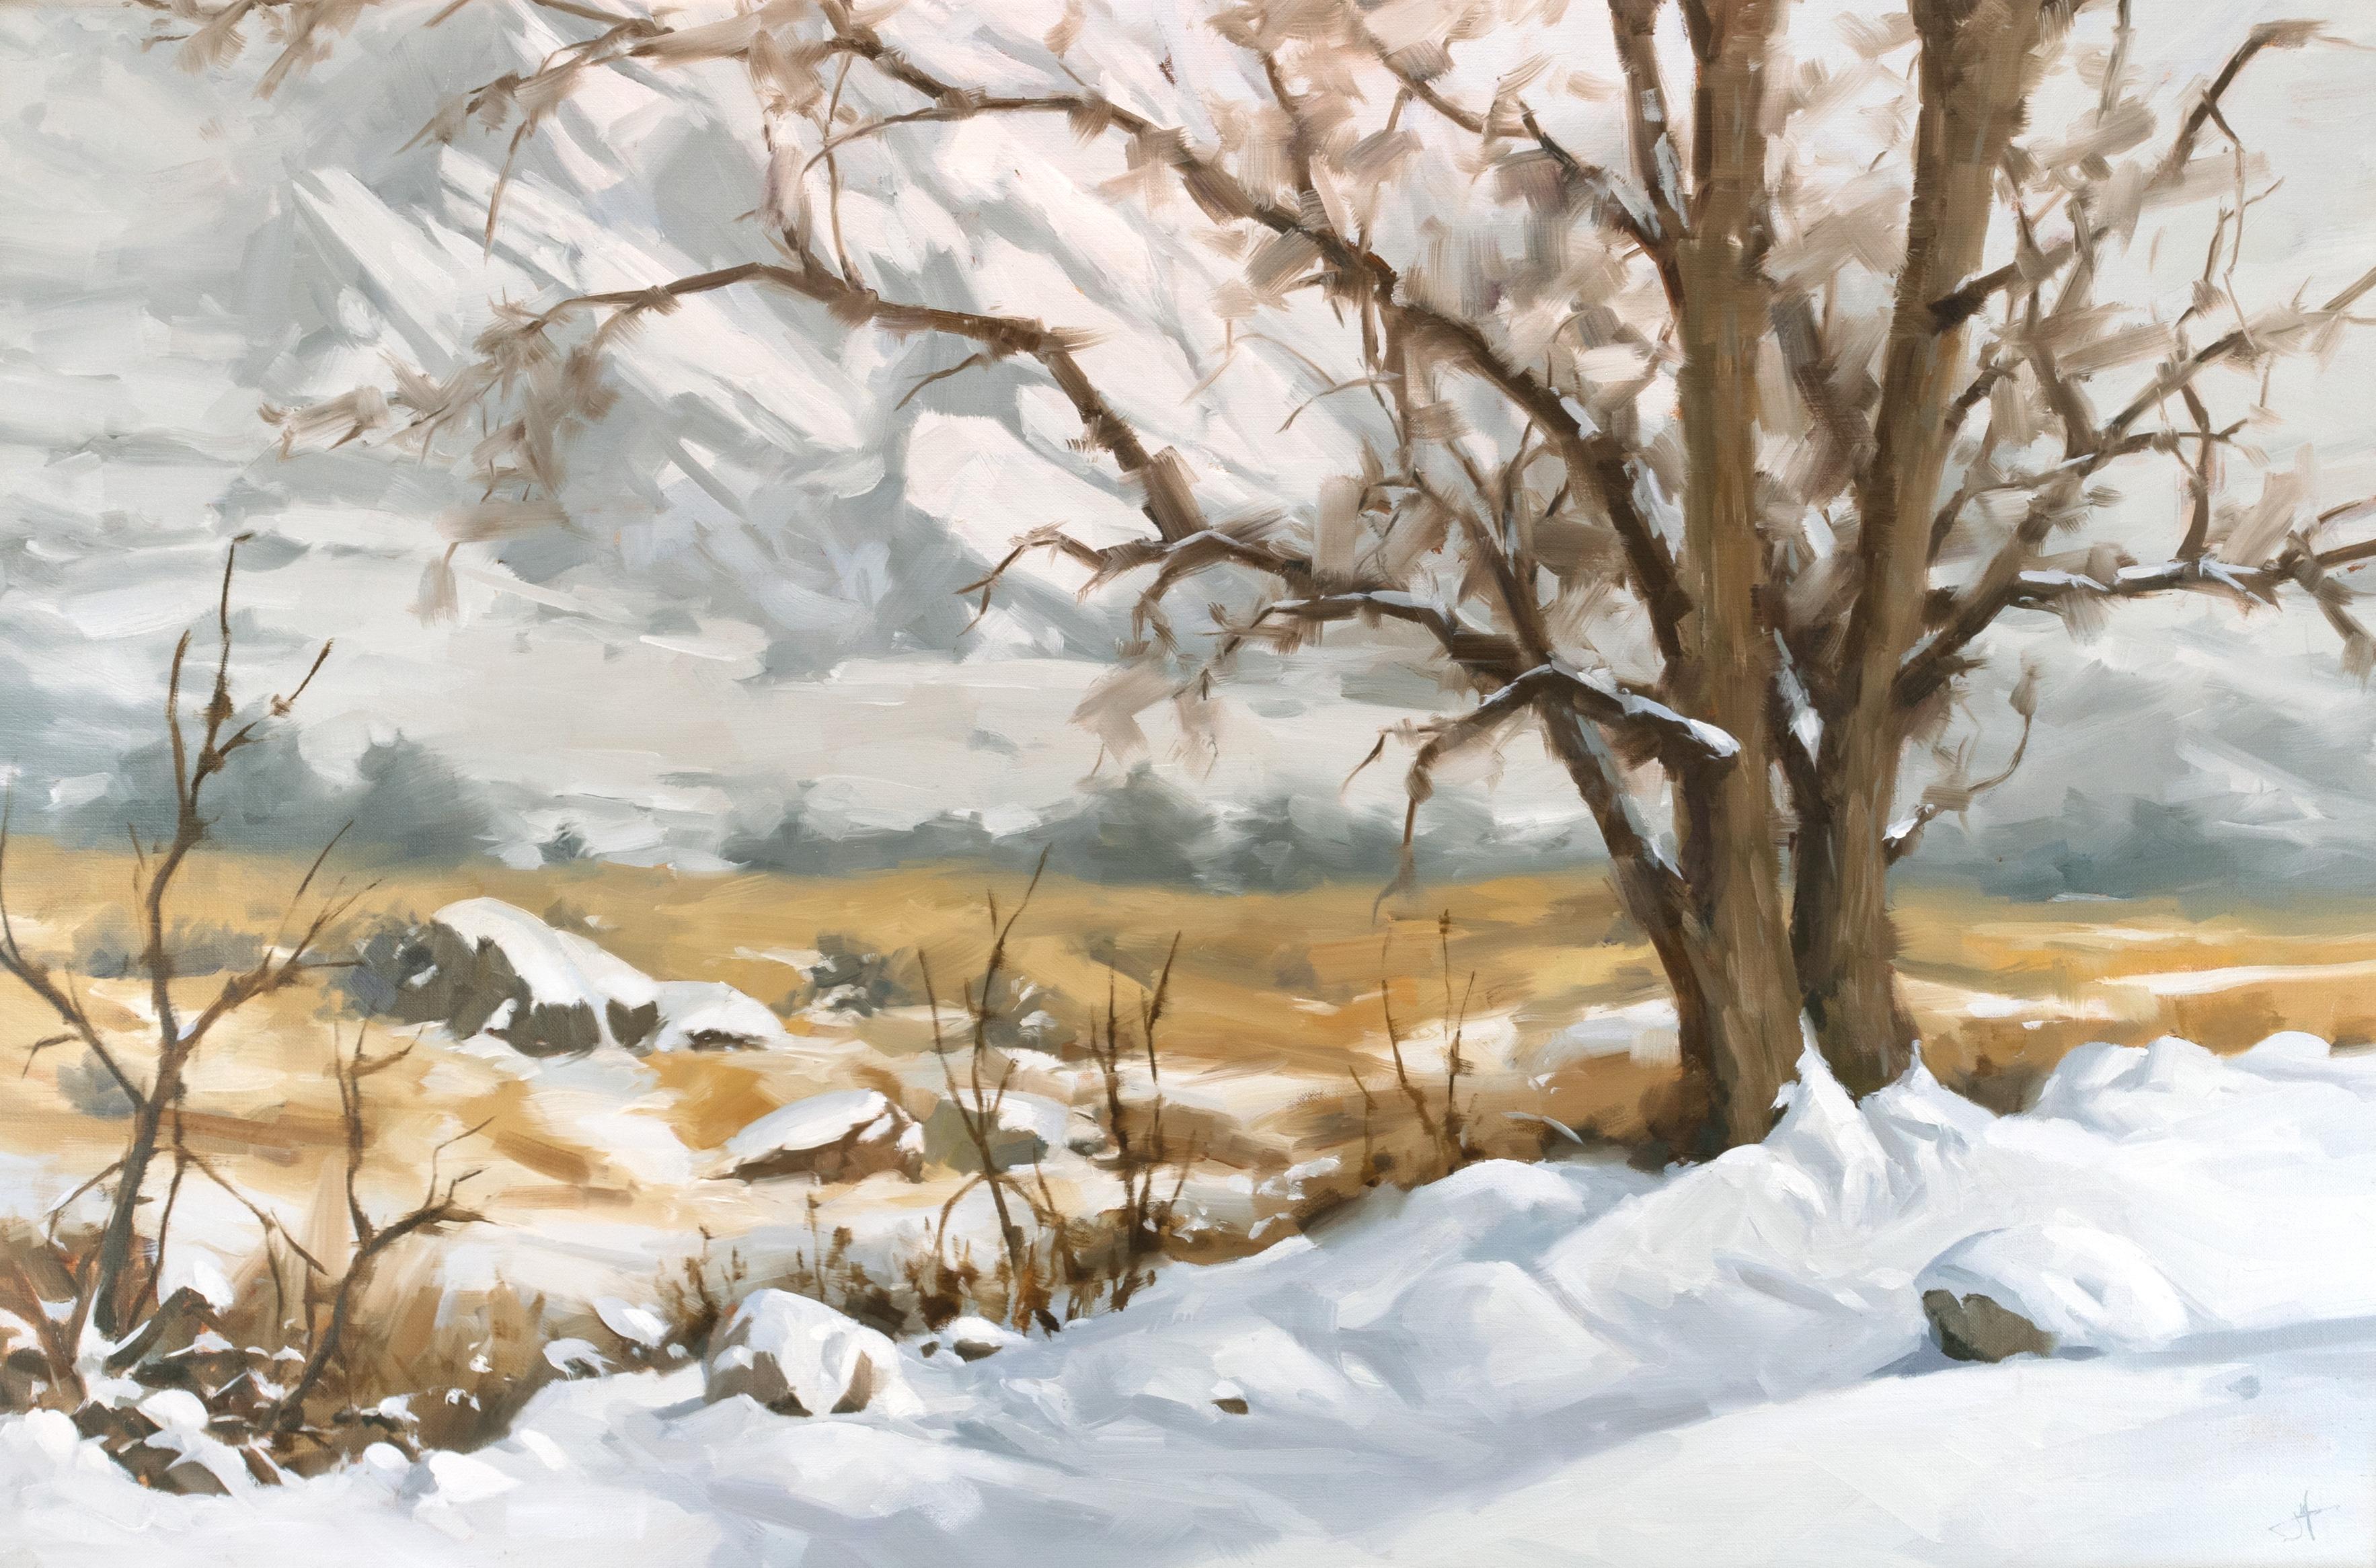 Judd Mercer Landscape Painting - "Winter Veil" Oil Painting